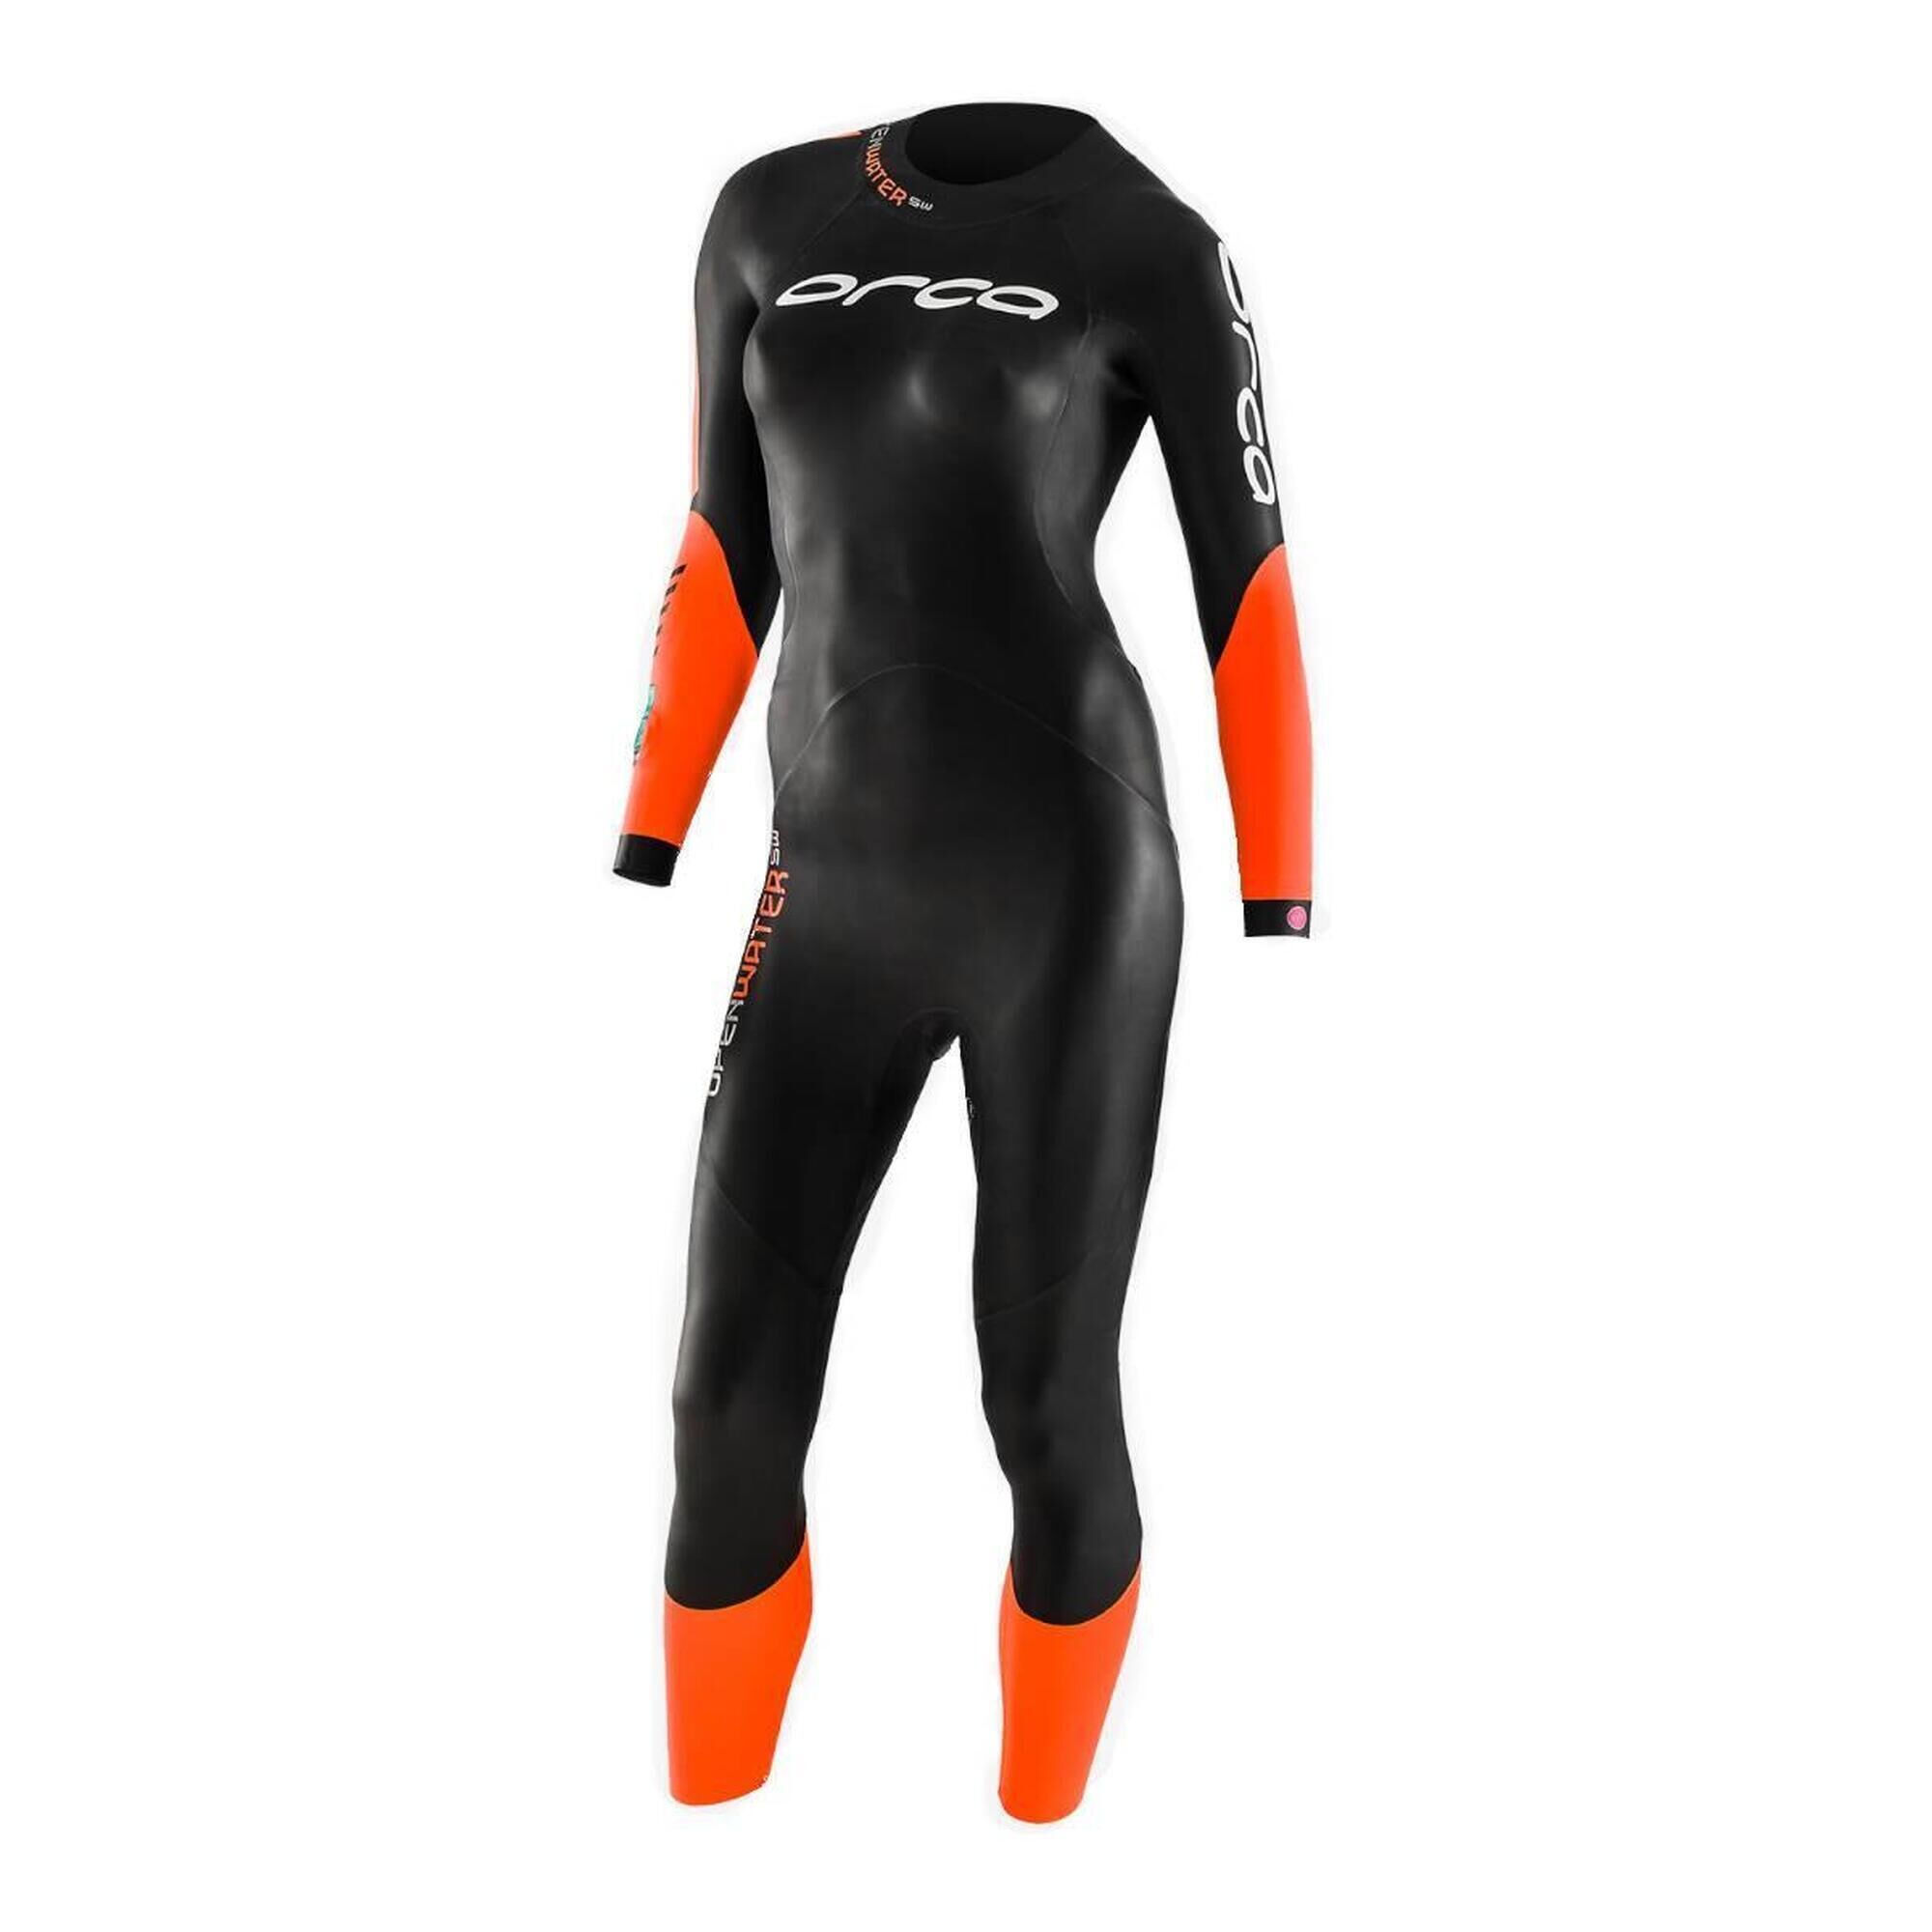 ORCA Orca Women's Openwater Smart Wetsuit - Black/ Orange - Size XS